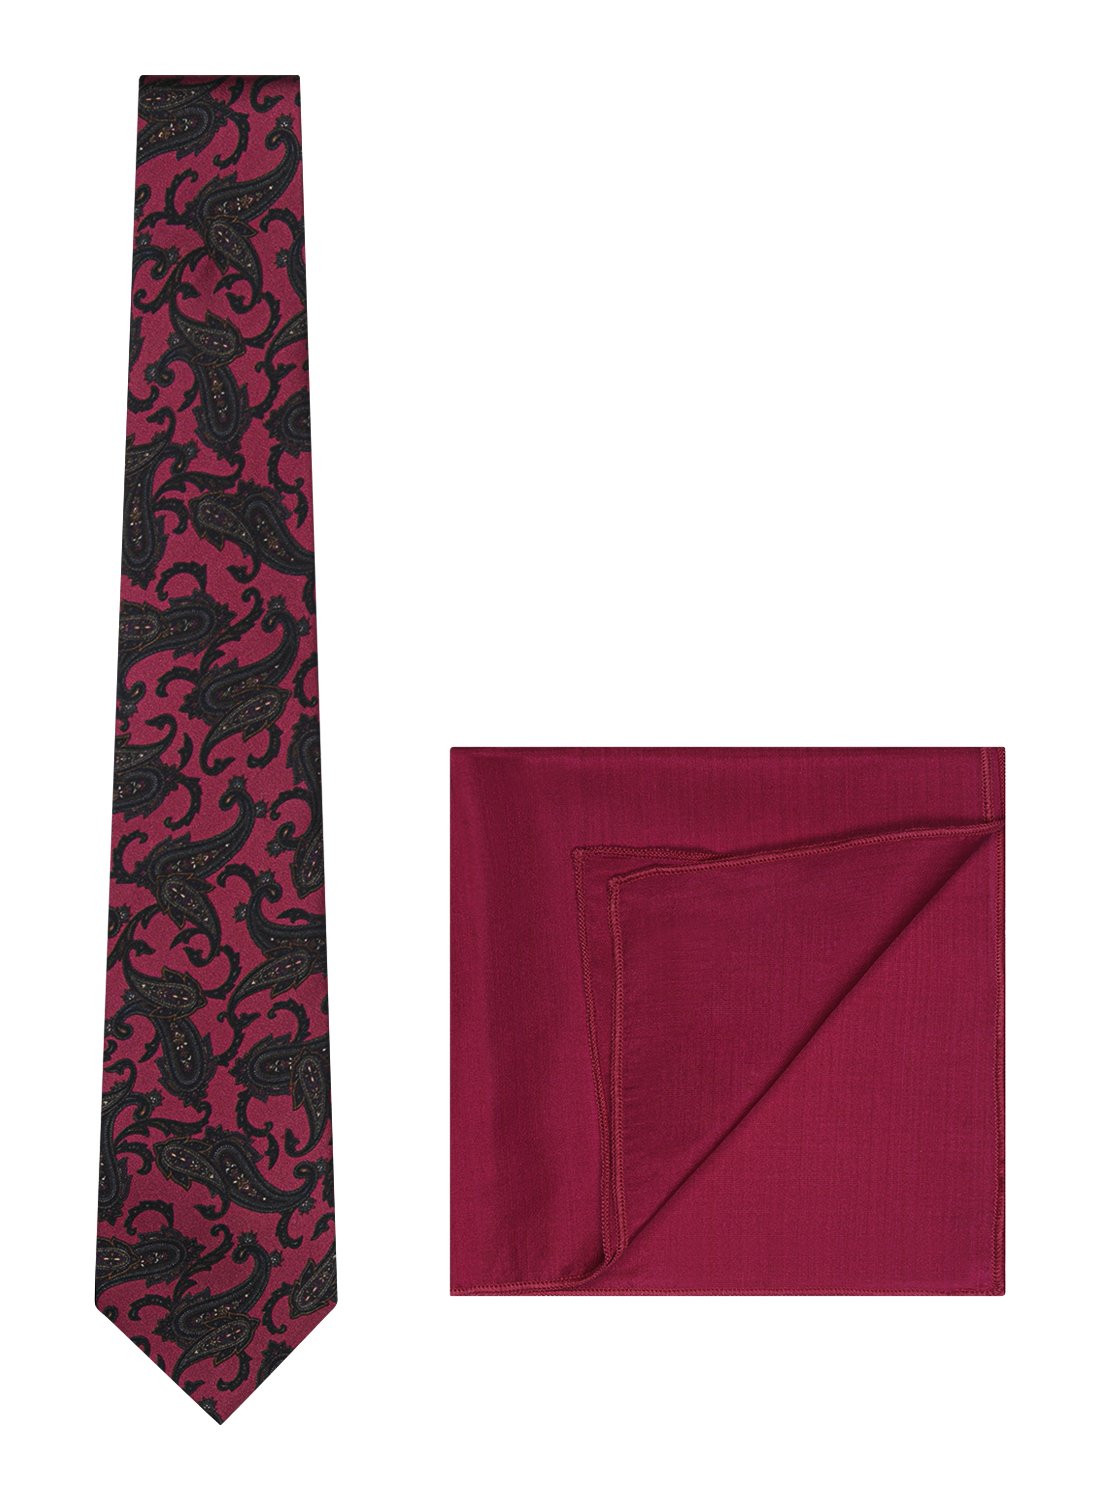 Chokore Marsela & Navy Blue Silk Tie - Indian At Heart range & Plain Pink color Silk Pocket Square set